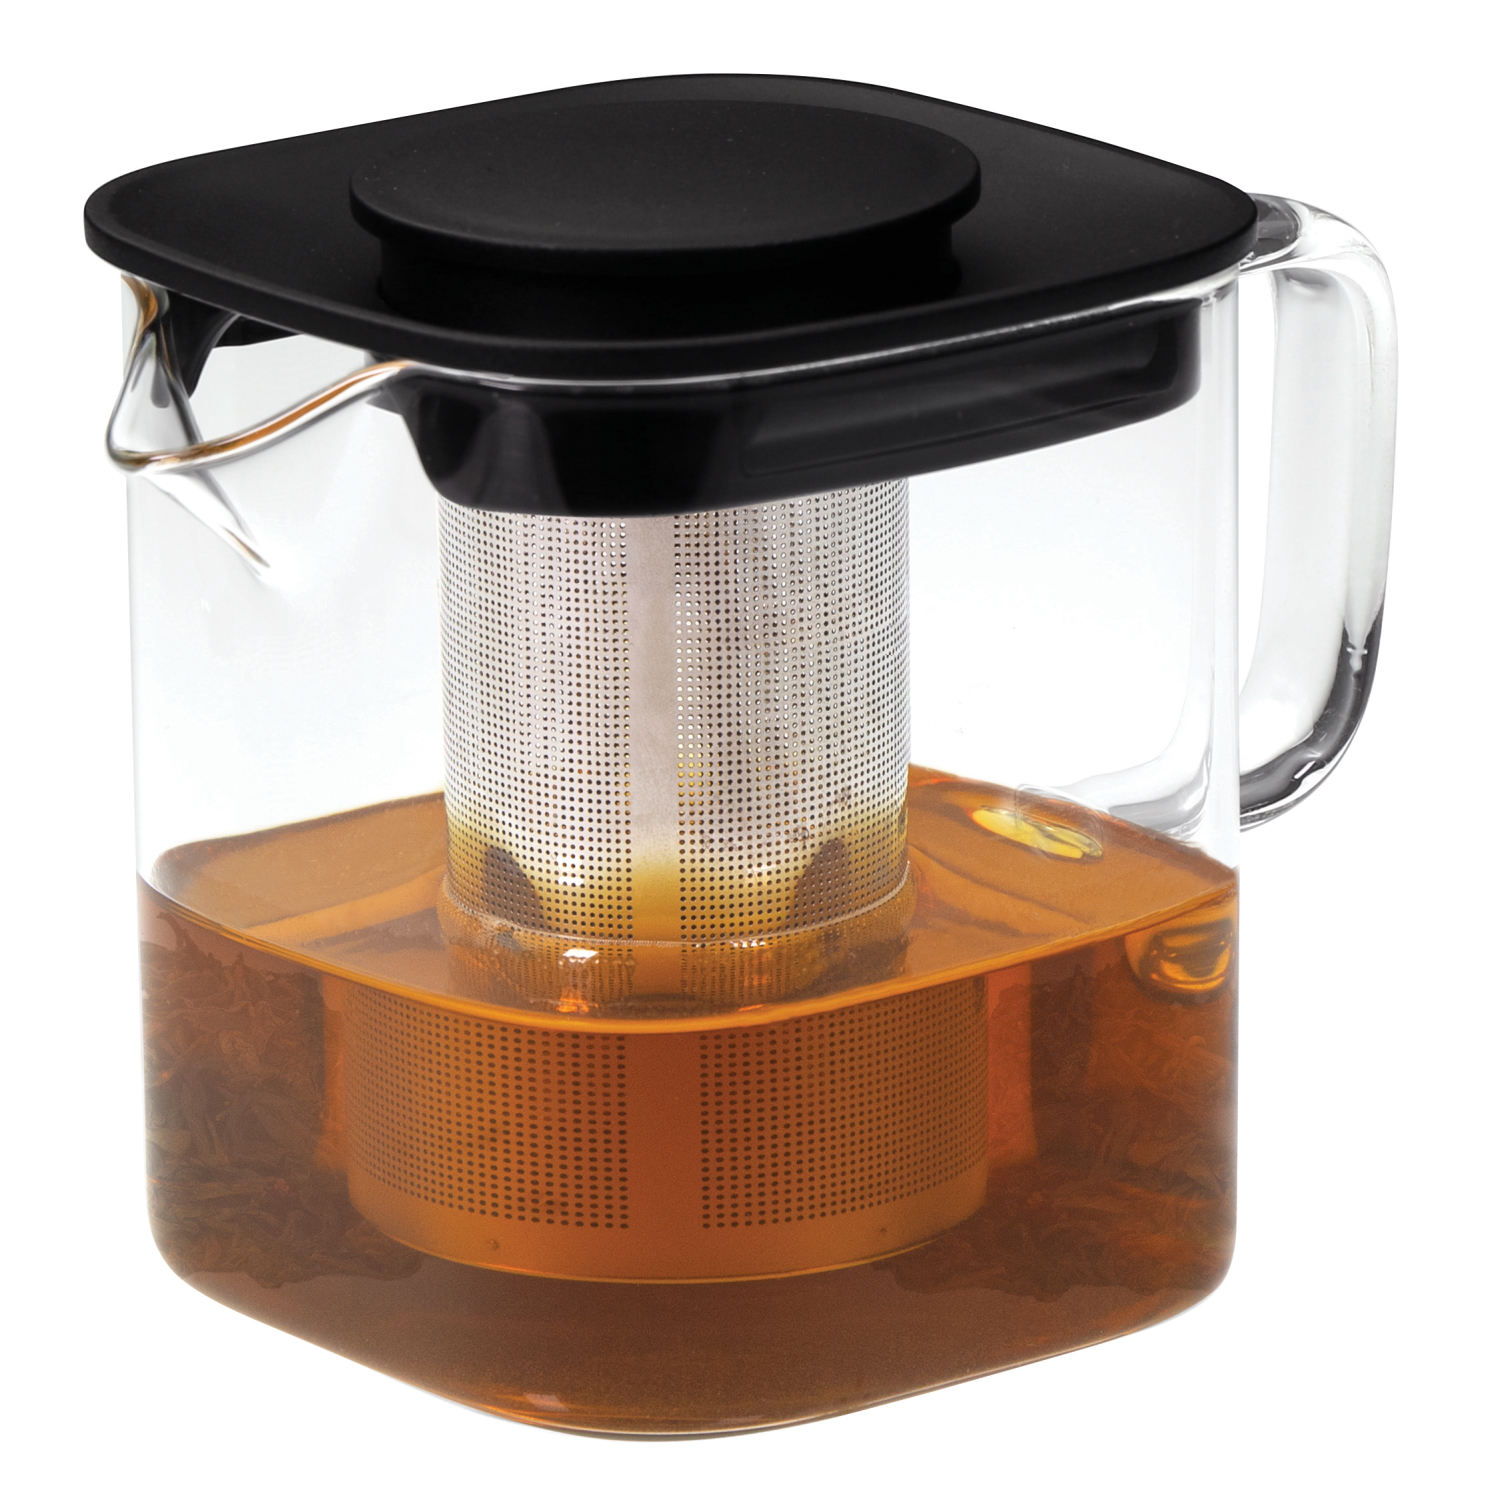 Avanti Oslo Square Glass Teapot-1000ml